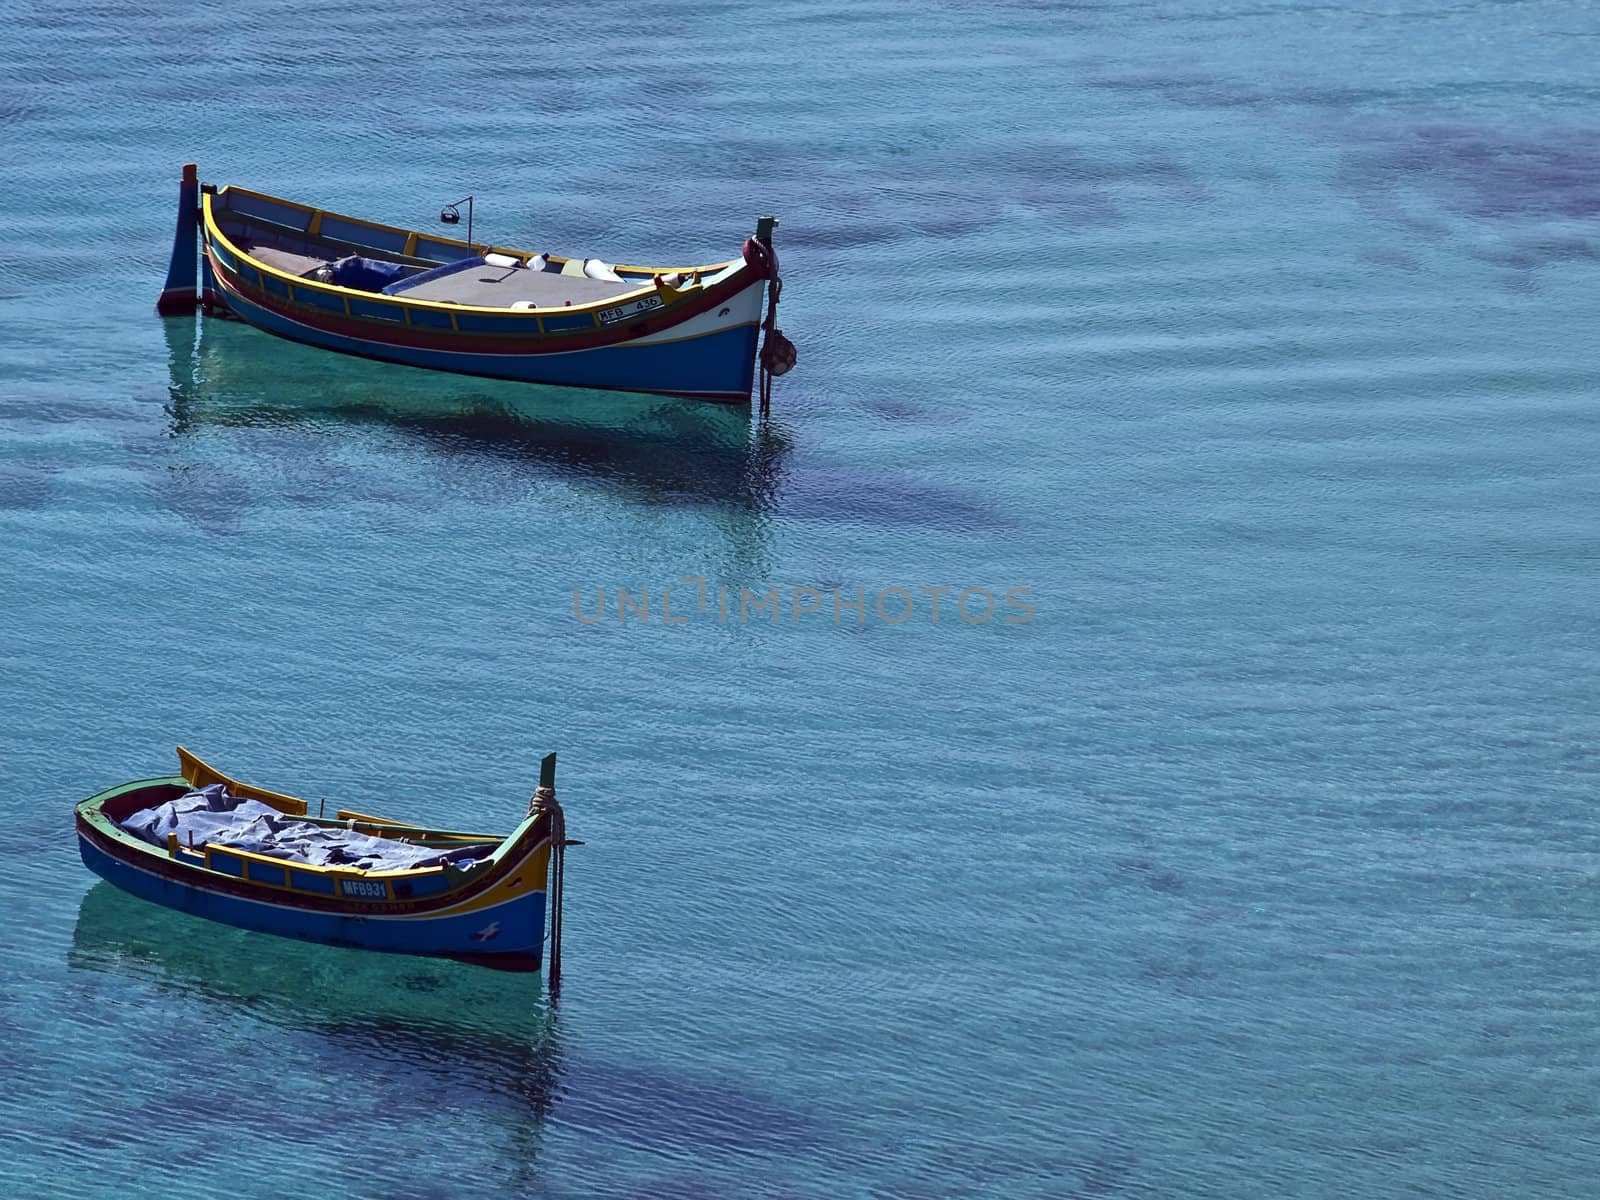 Malta Dghajsa by PhotoWorks